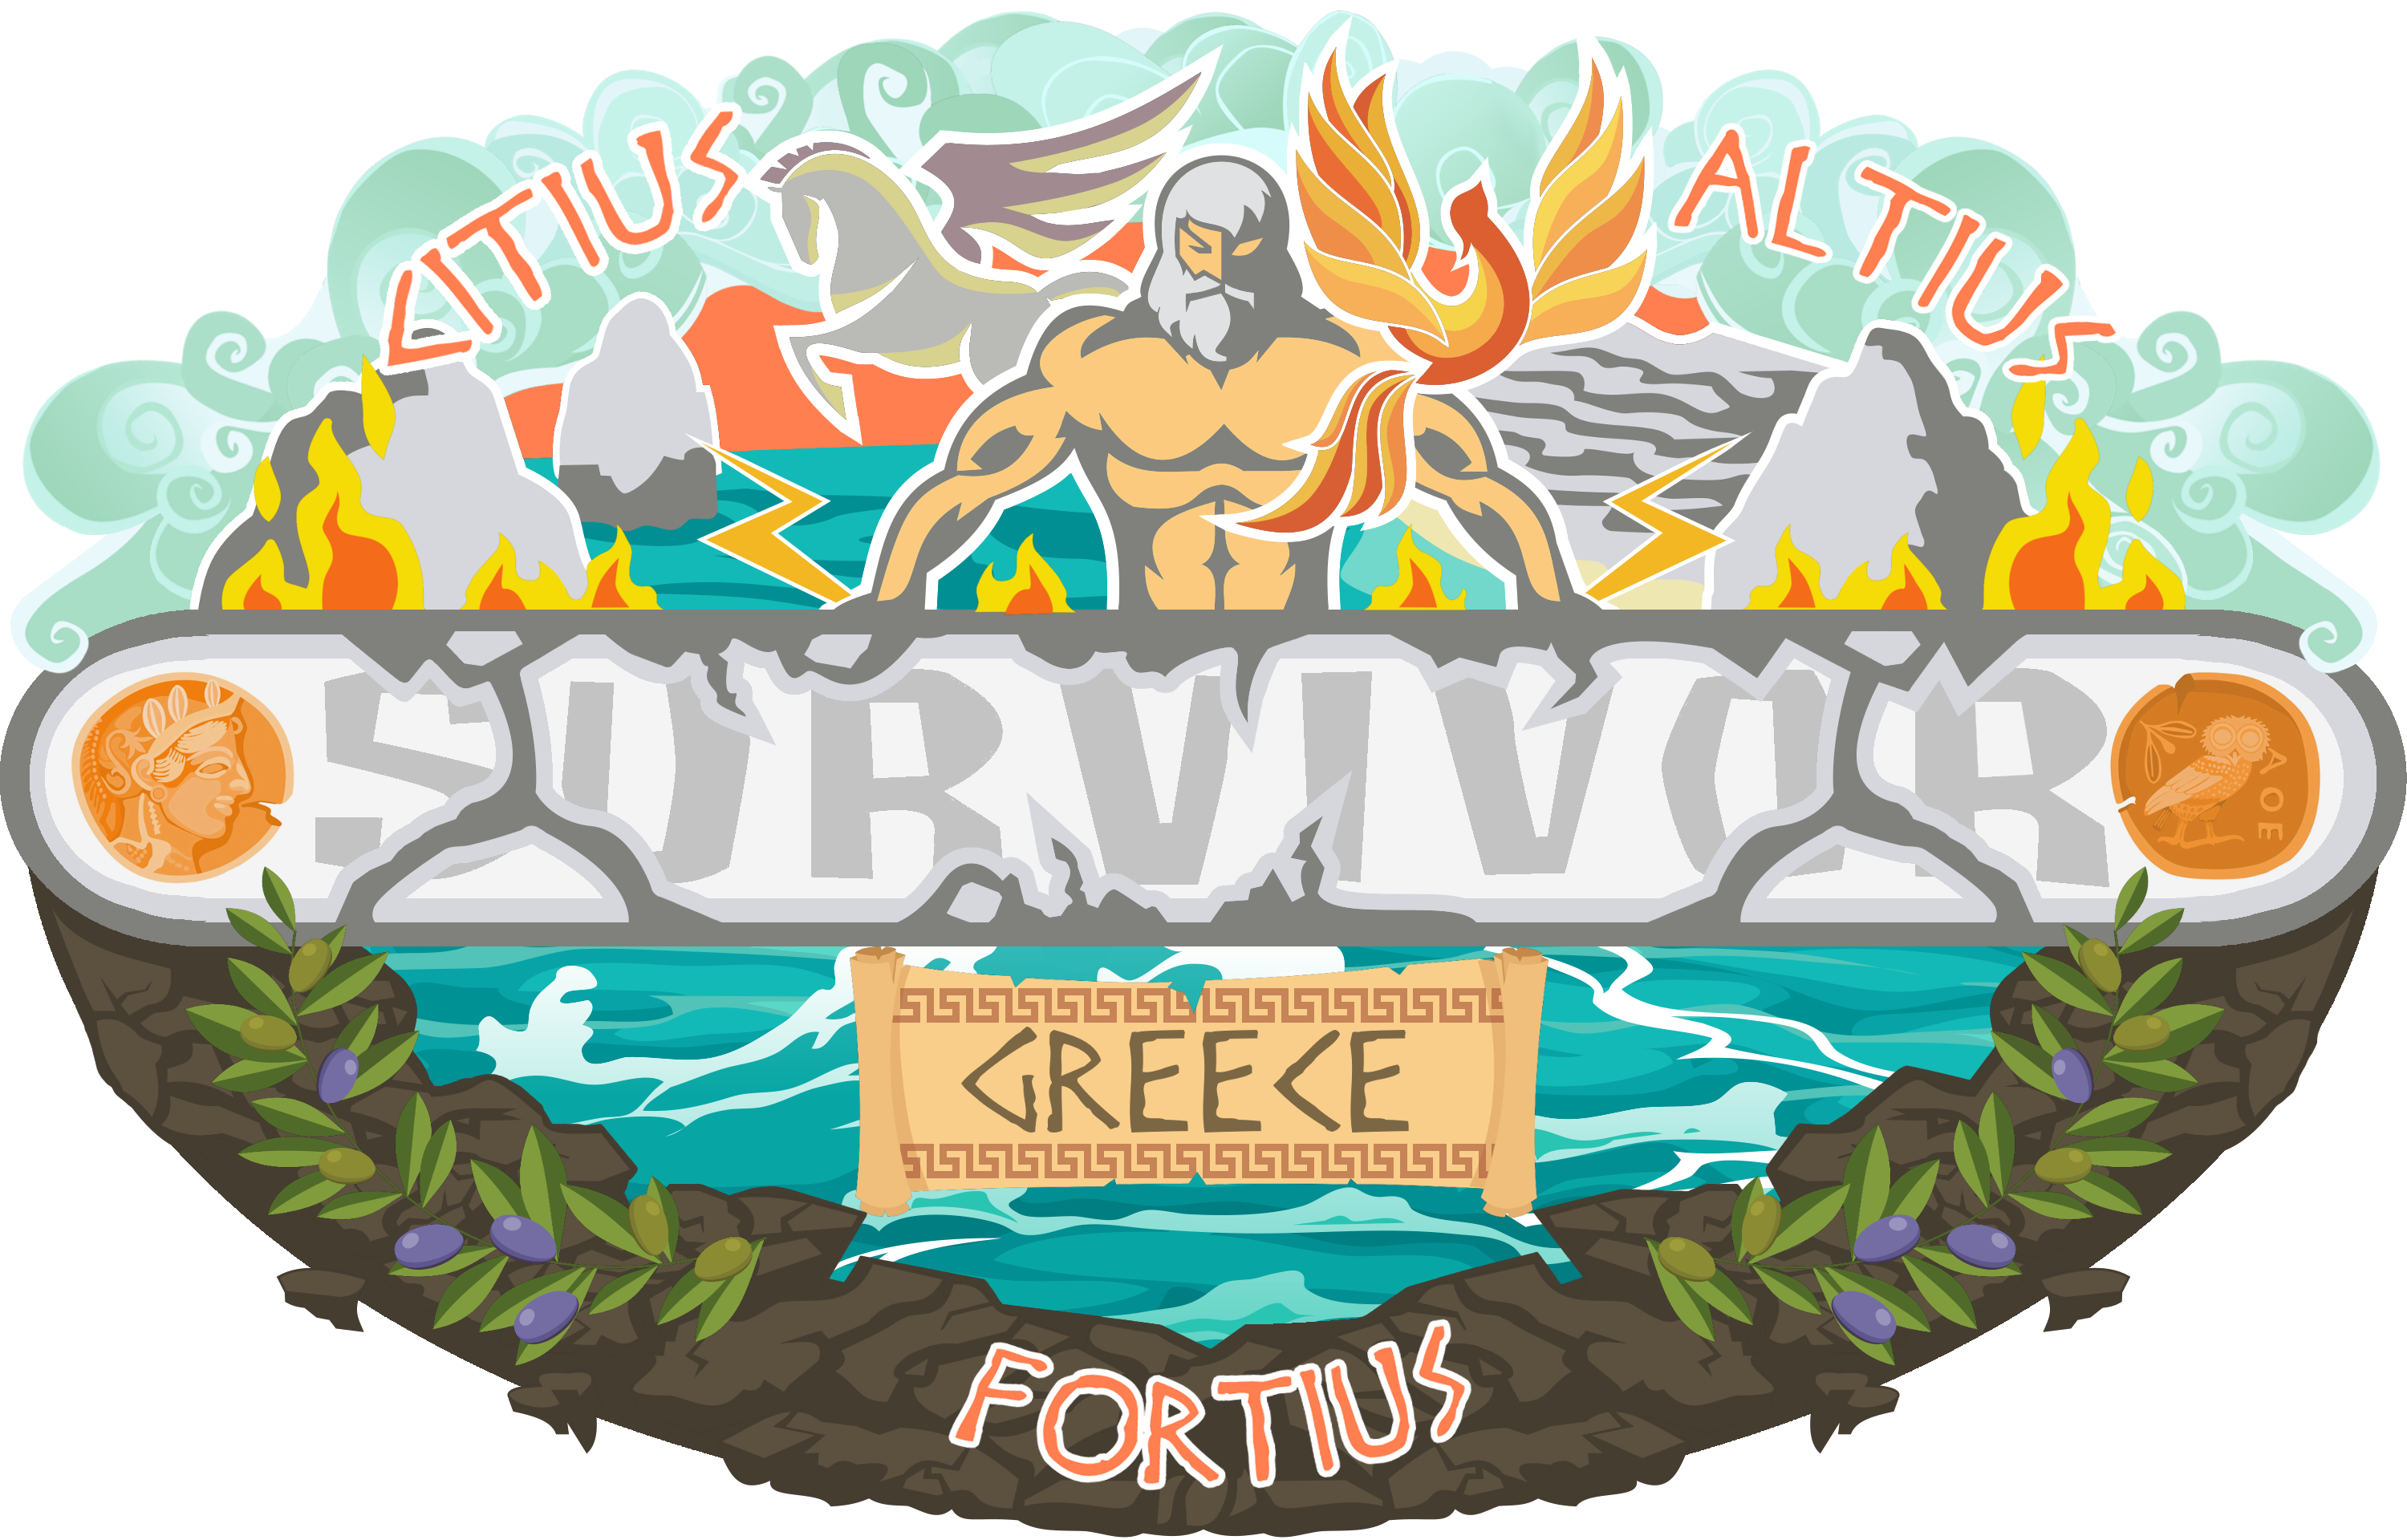 Greek clipart greek latin. Made a logo for